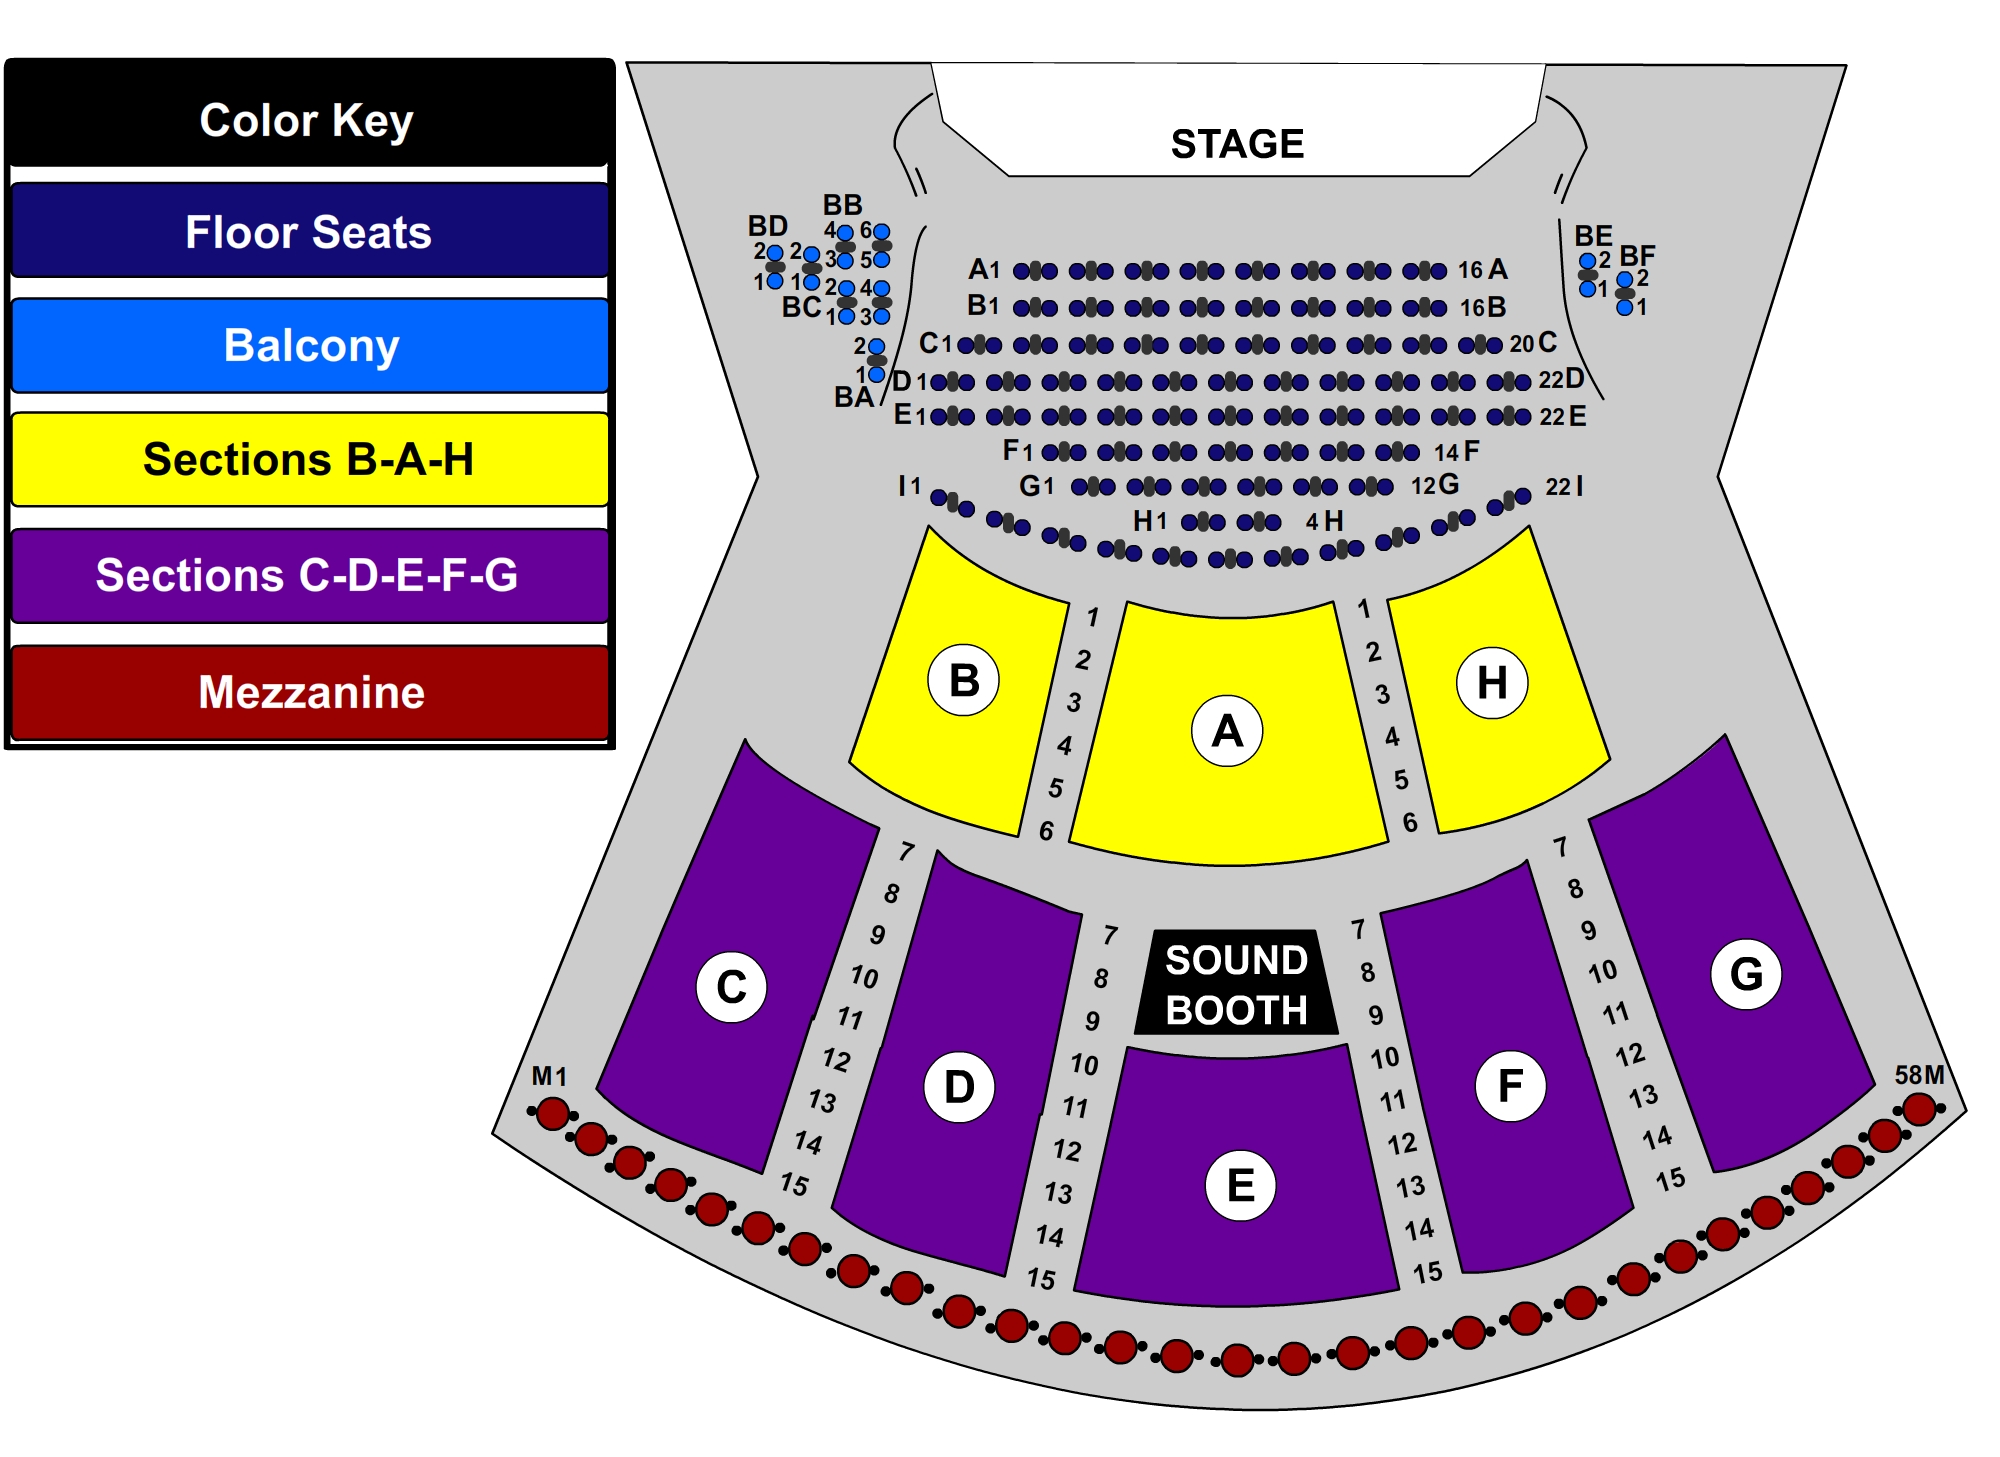 Key West Amphitheater Seating Chart